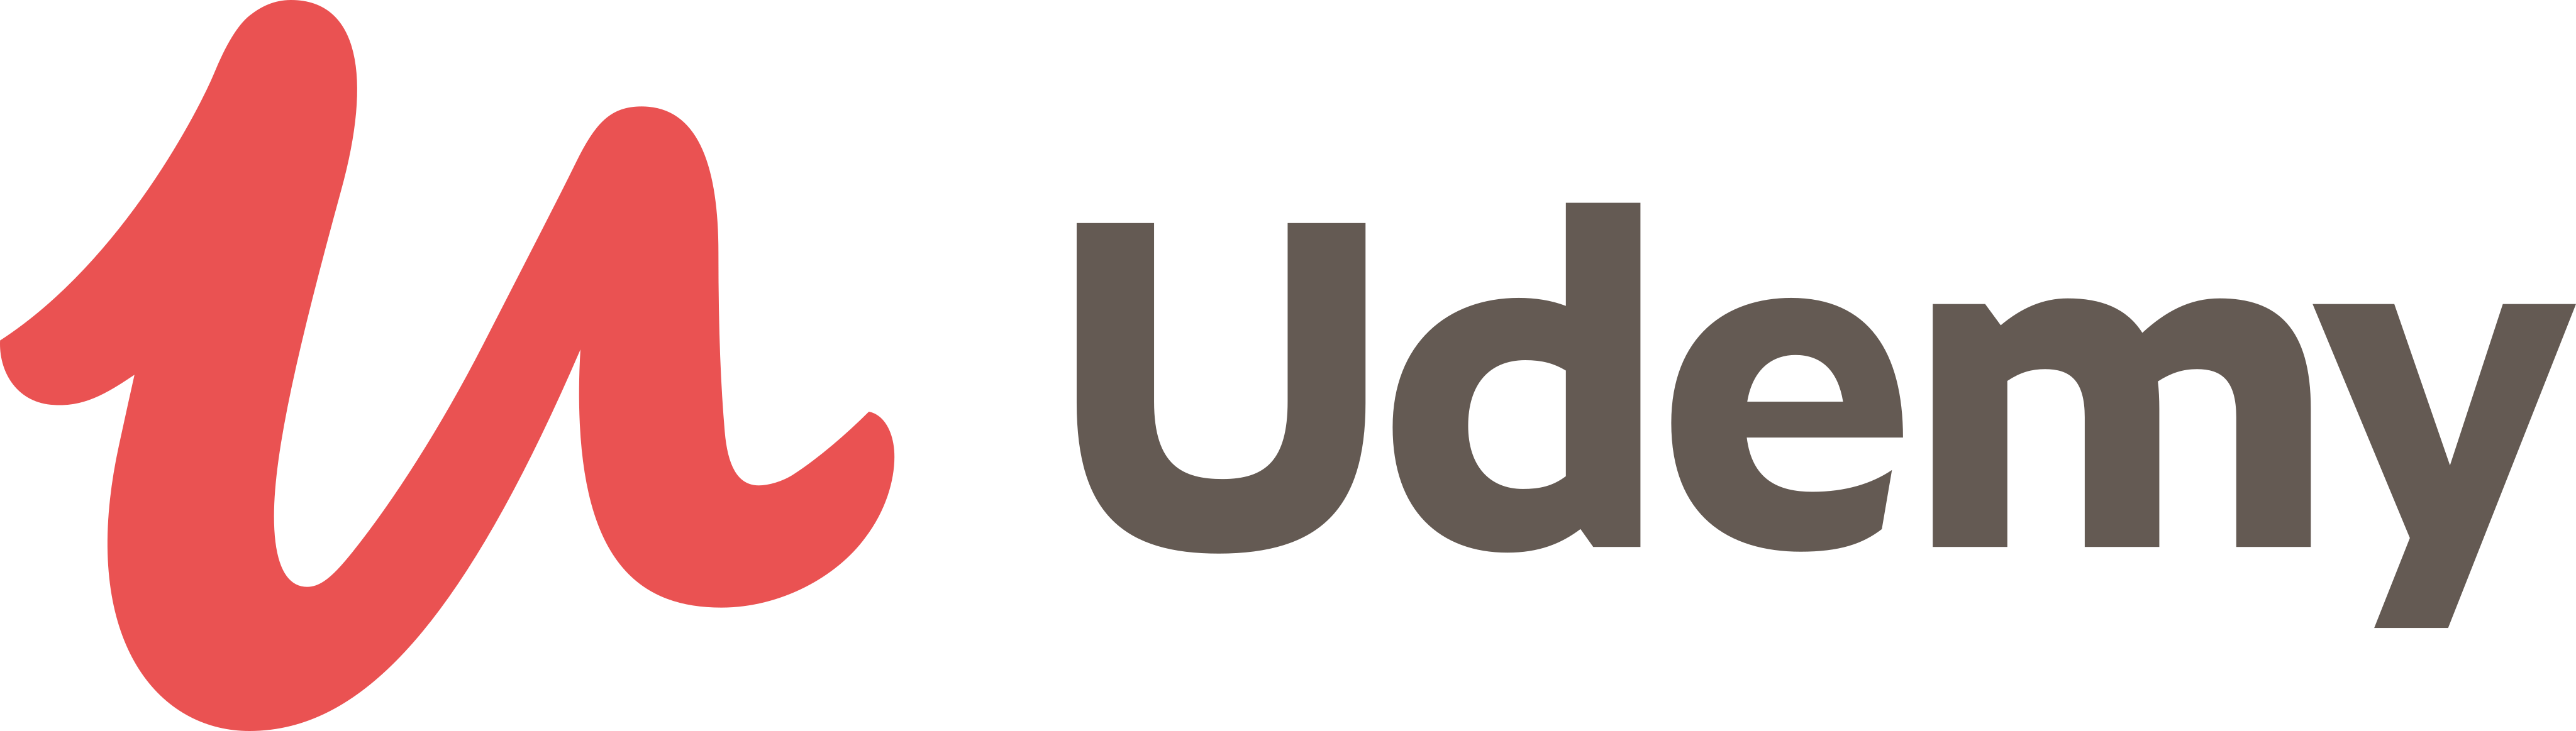 Udemy_logo